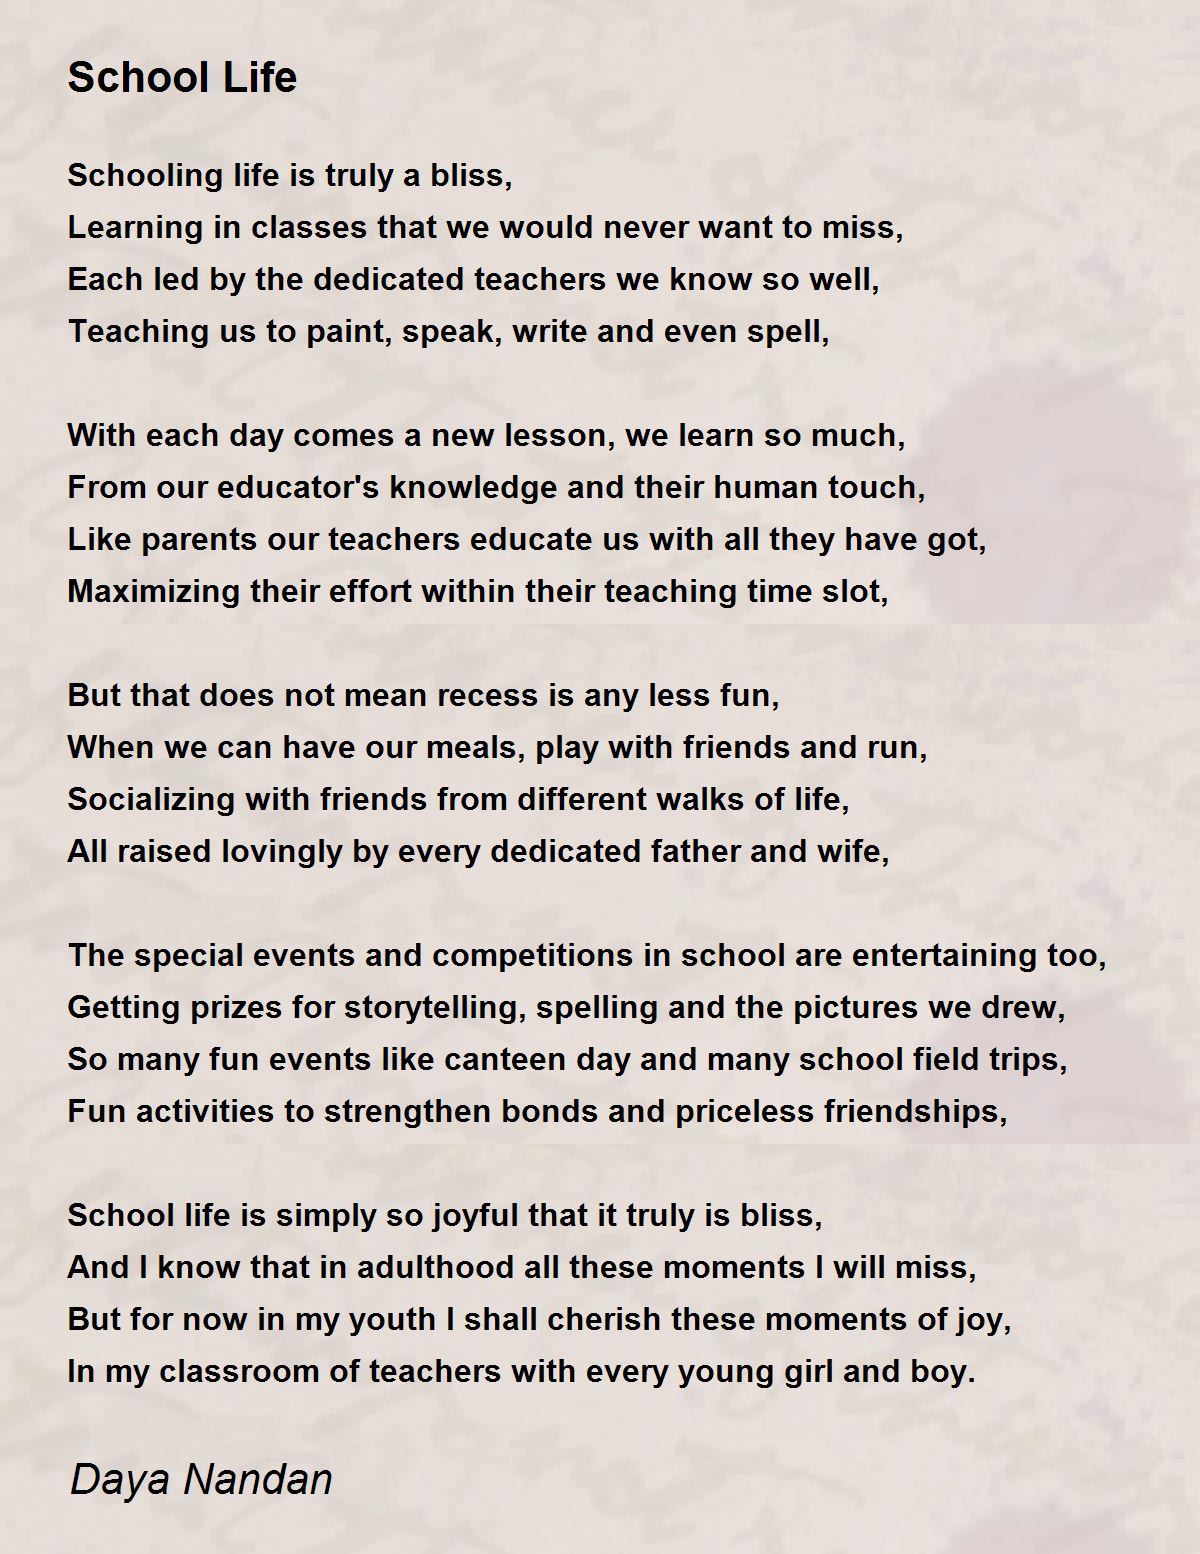 School Life - School Life Poem by Daya Nandan